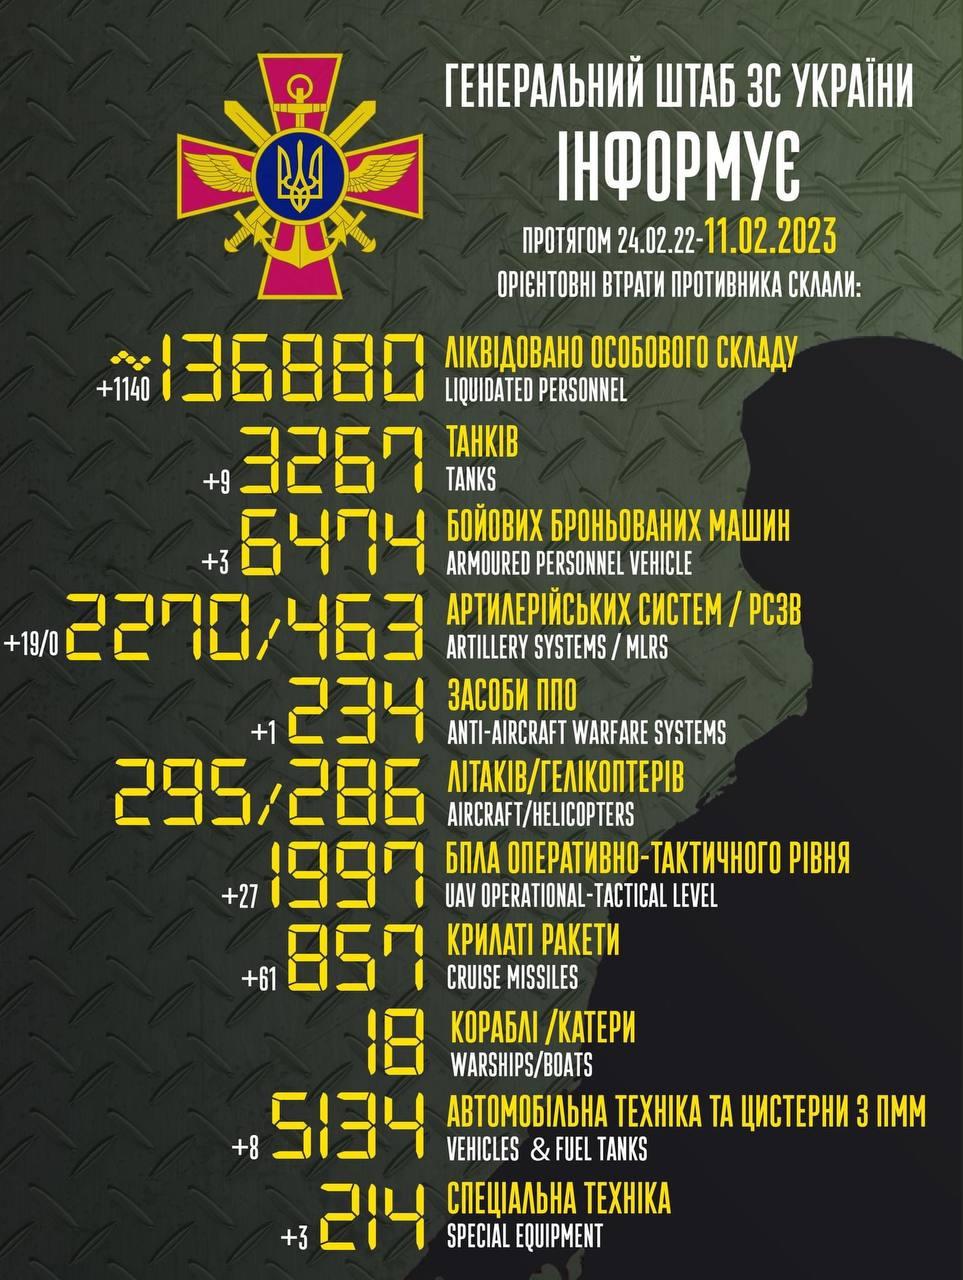 Russia’s losses in Ukraine as of 11/02/2023